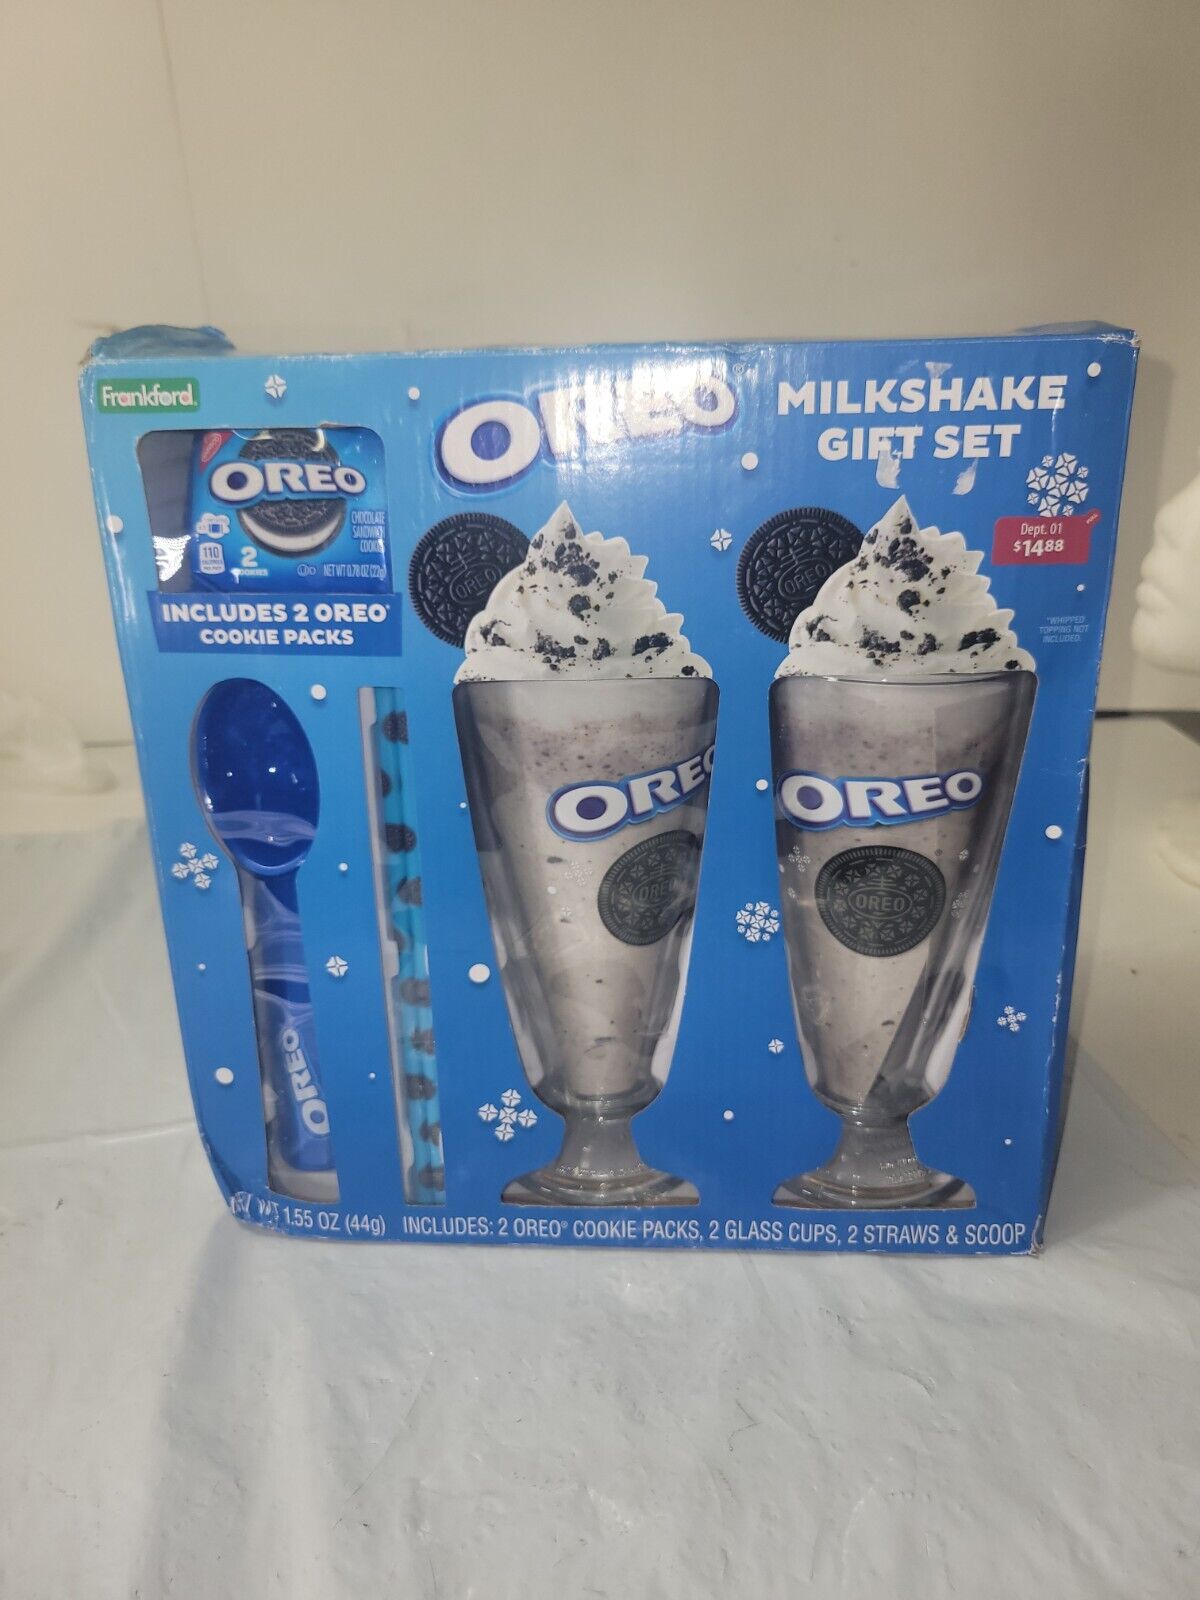 Oreo Milkshake Gift Set w/ 2 Glass Cups, 2 Oreo Cookie Packs, Scoop & 2 Straws